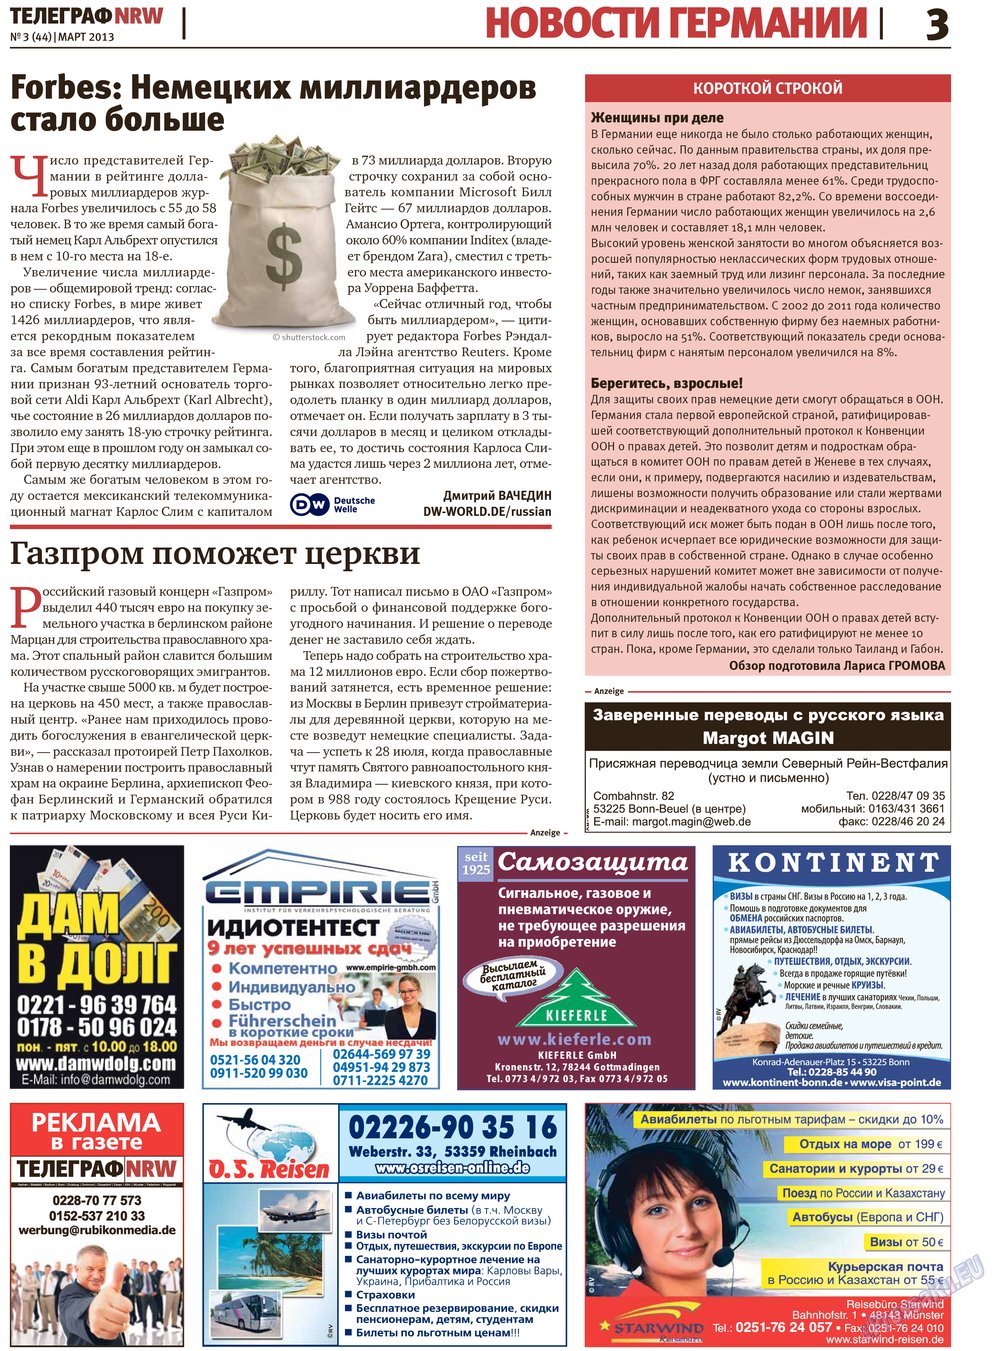 Телеграф NRW, газета. 2013 №3 стр.3